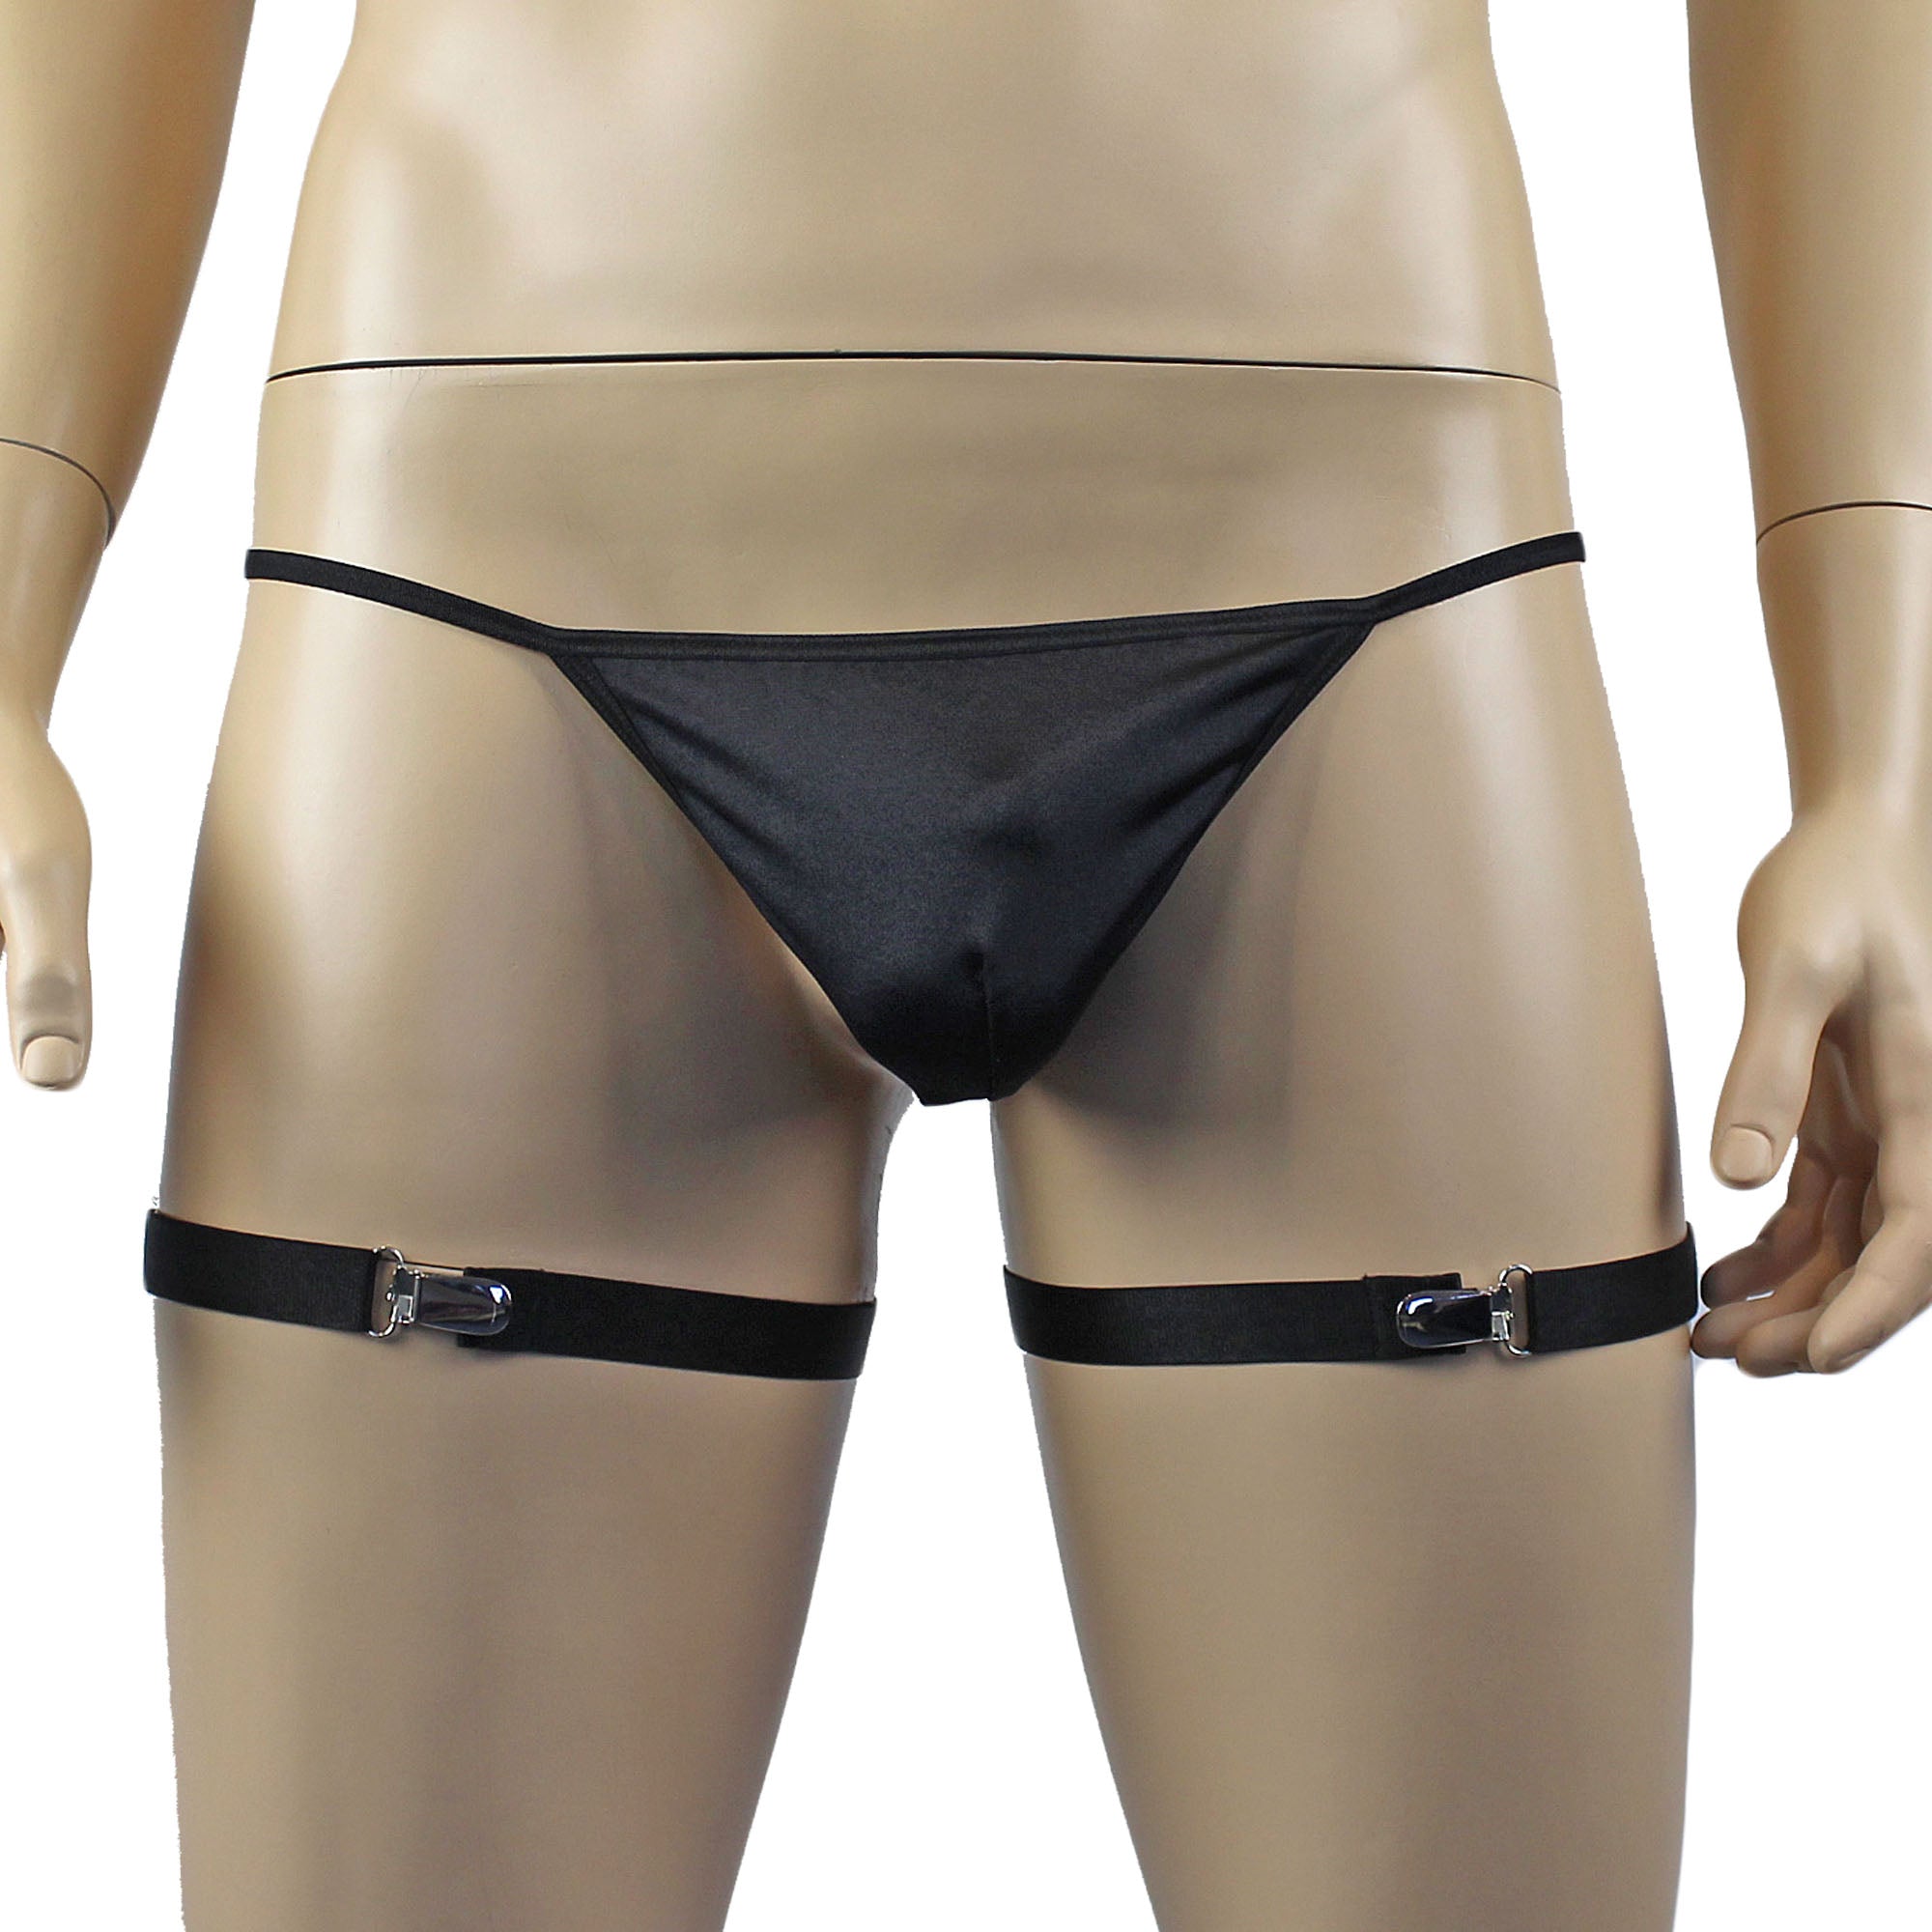 Unisex Zoe Underwear Adjustable Garters with Suspender Clips Black